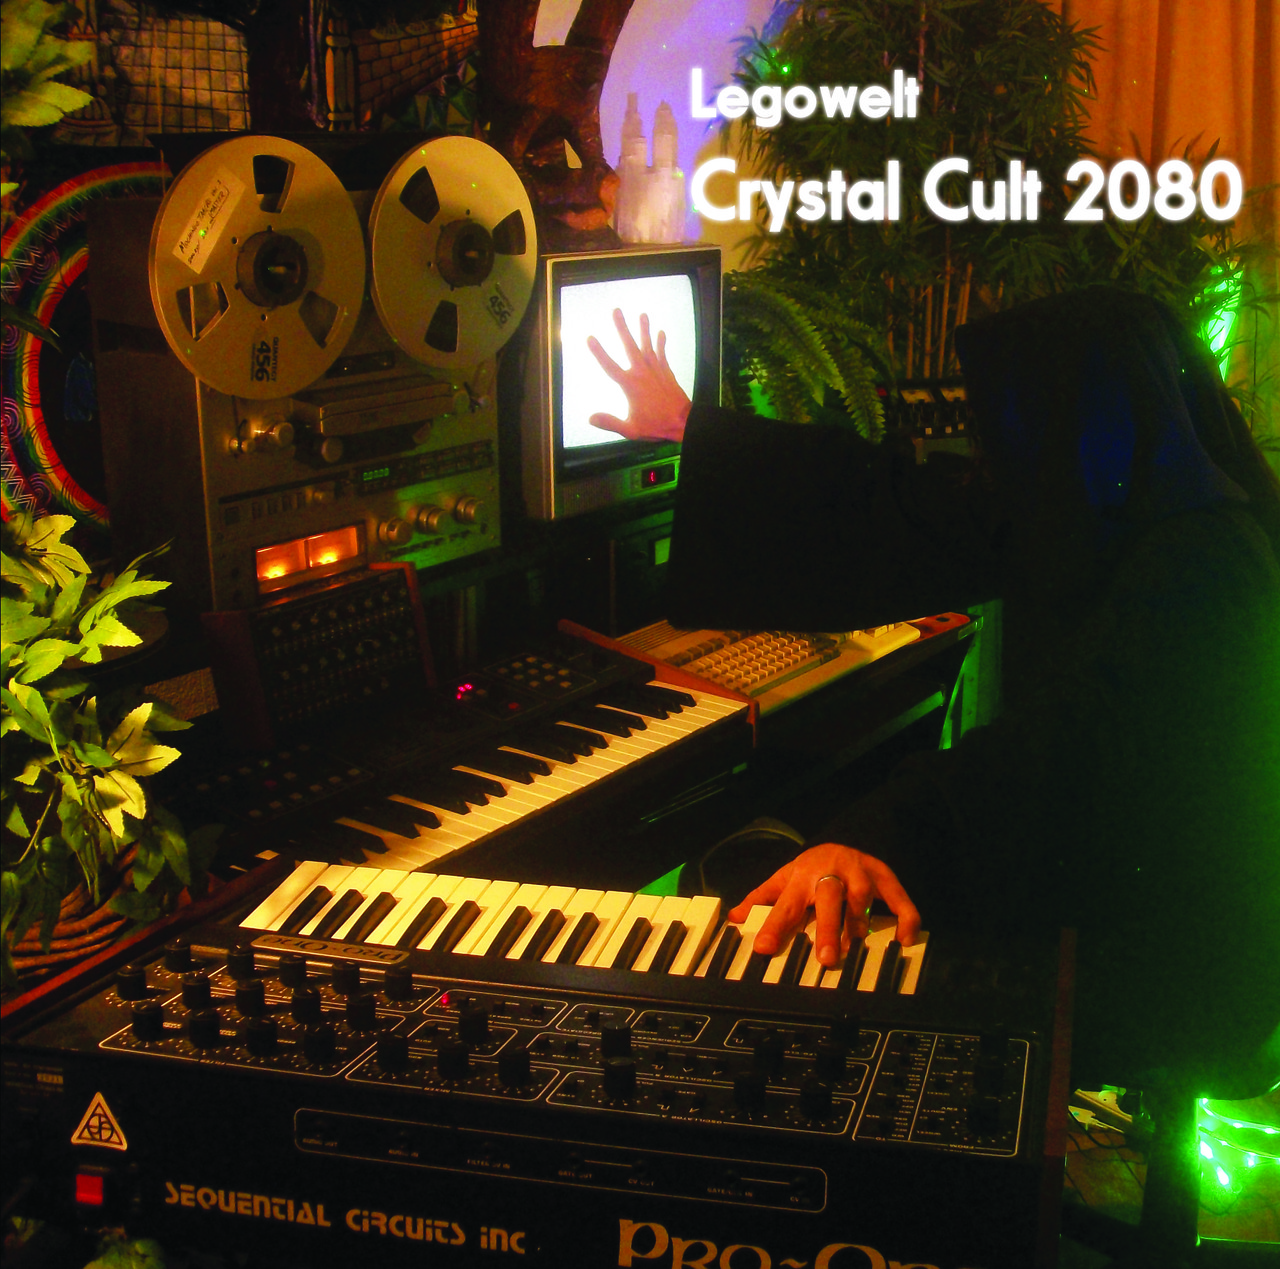 Legowelt - Crystal Cult 2080